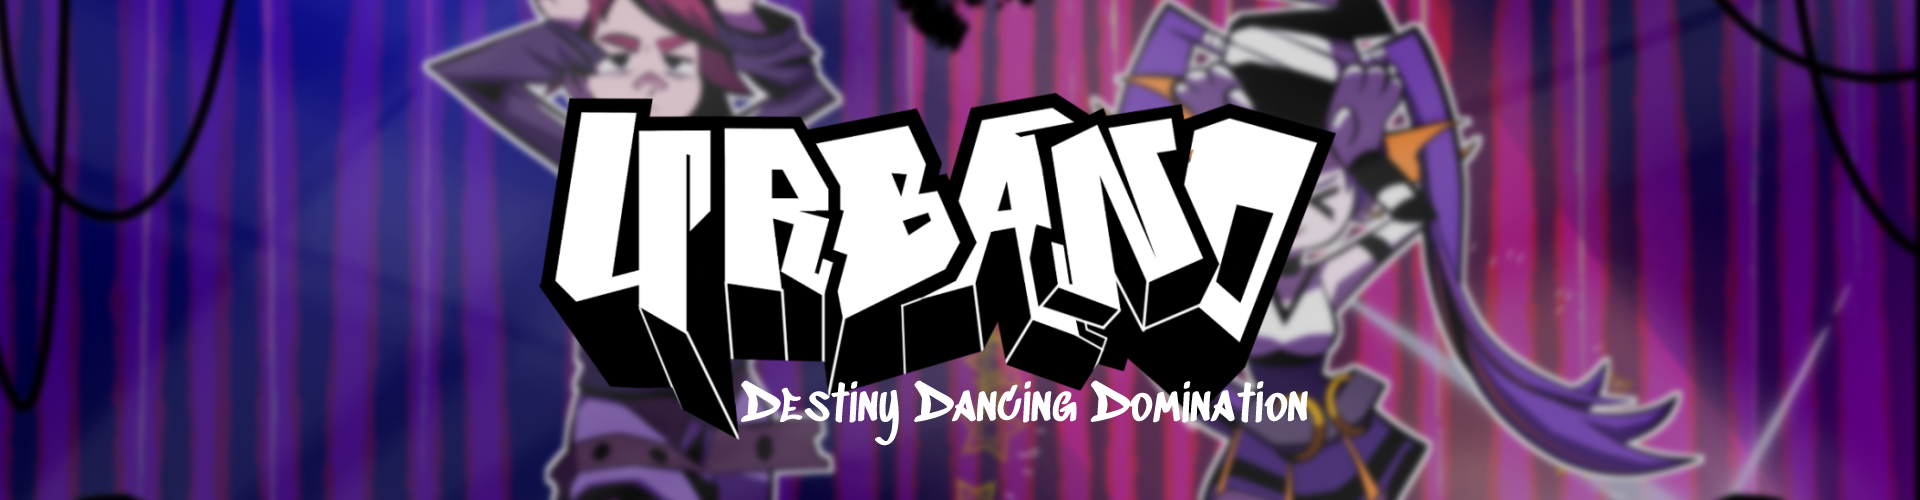 Urbano Destiny Dancing Domination